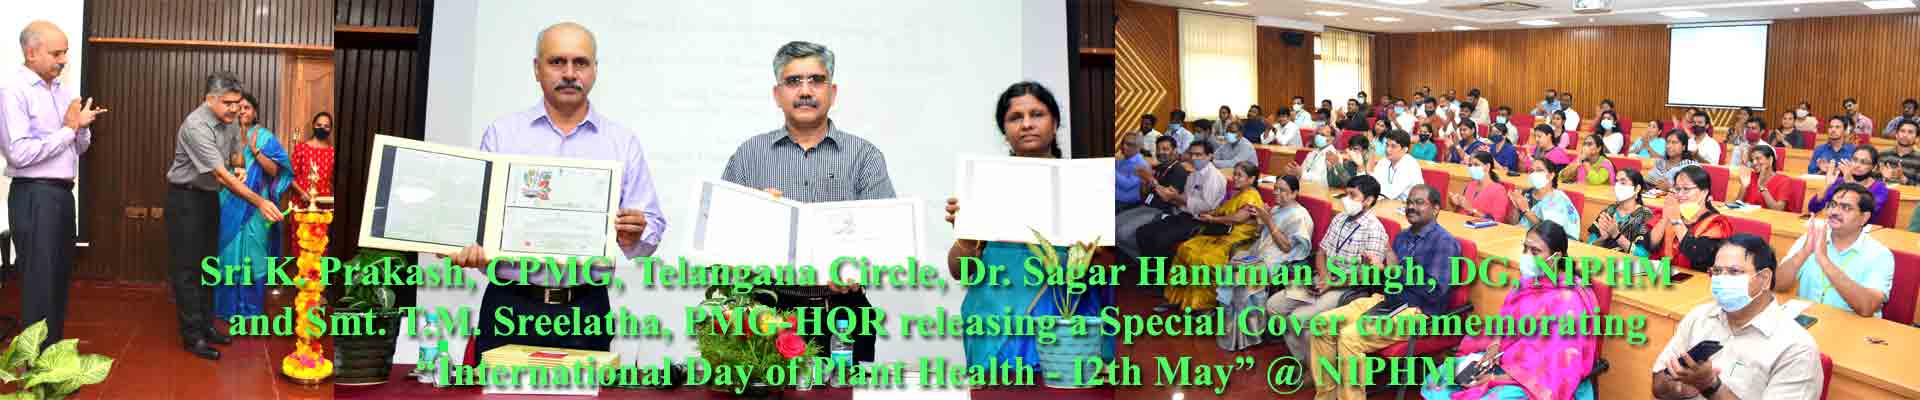 Sri K. Prakash, CPMG, Telangana Circle, Dr. Sagar Hanuman Singh, DG, NIPHM and Smt. T.M. Sreelatha, PMG-HQR releasing Special Cover commemorating International Day of Plant Health - 12th May @ NIPHM